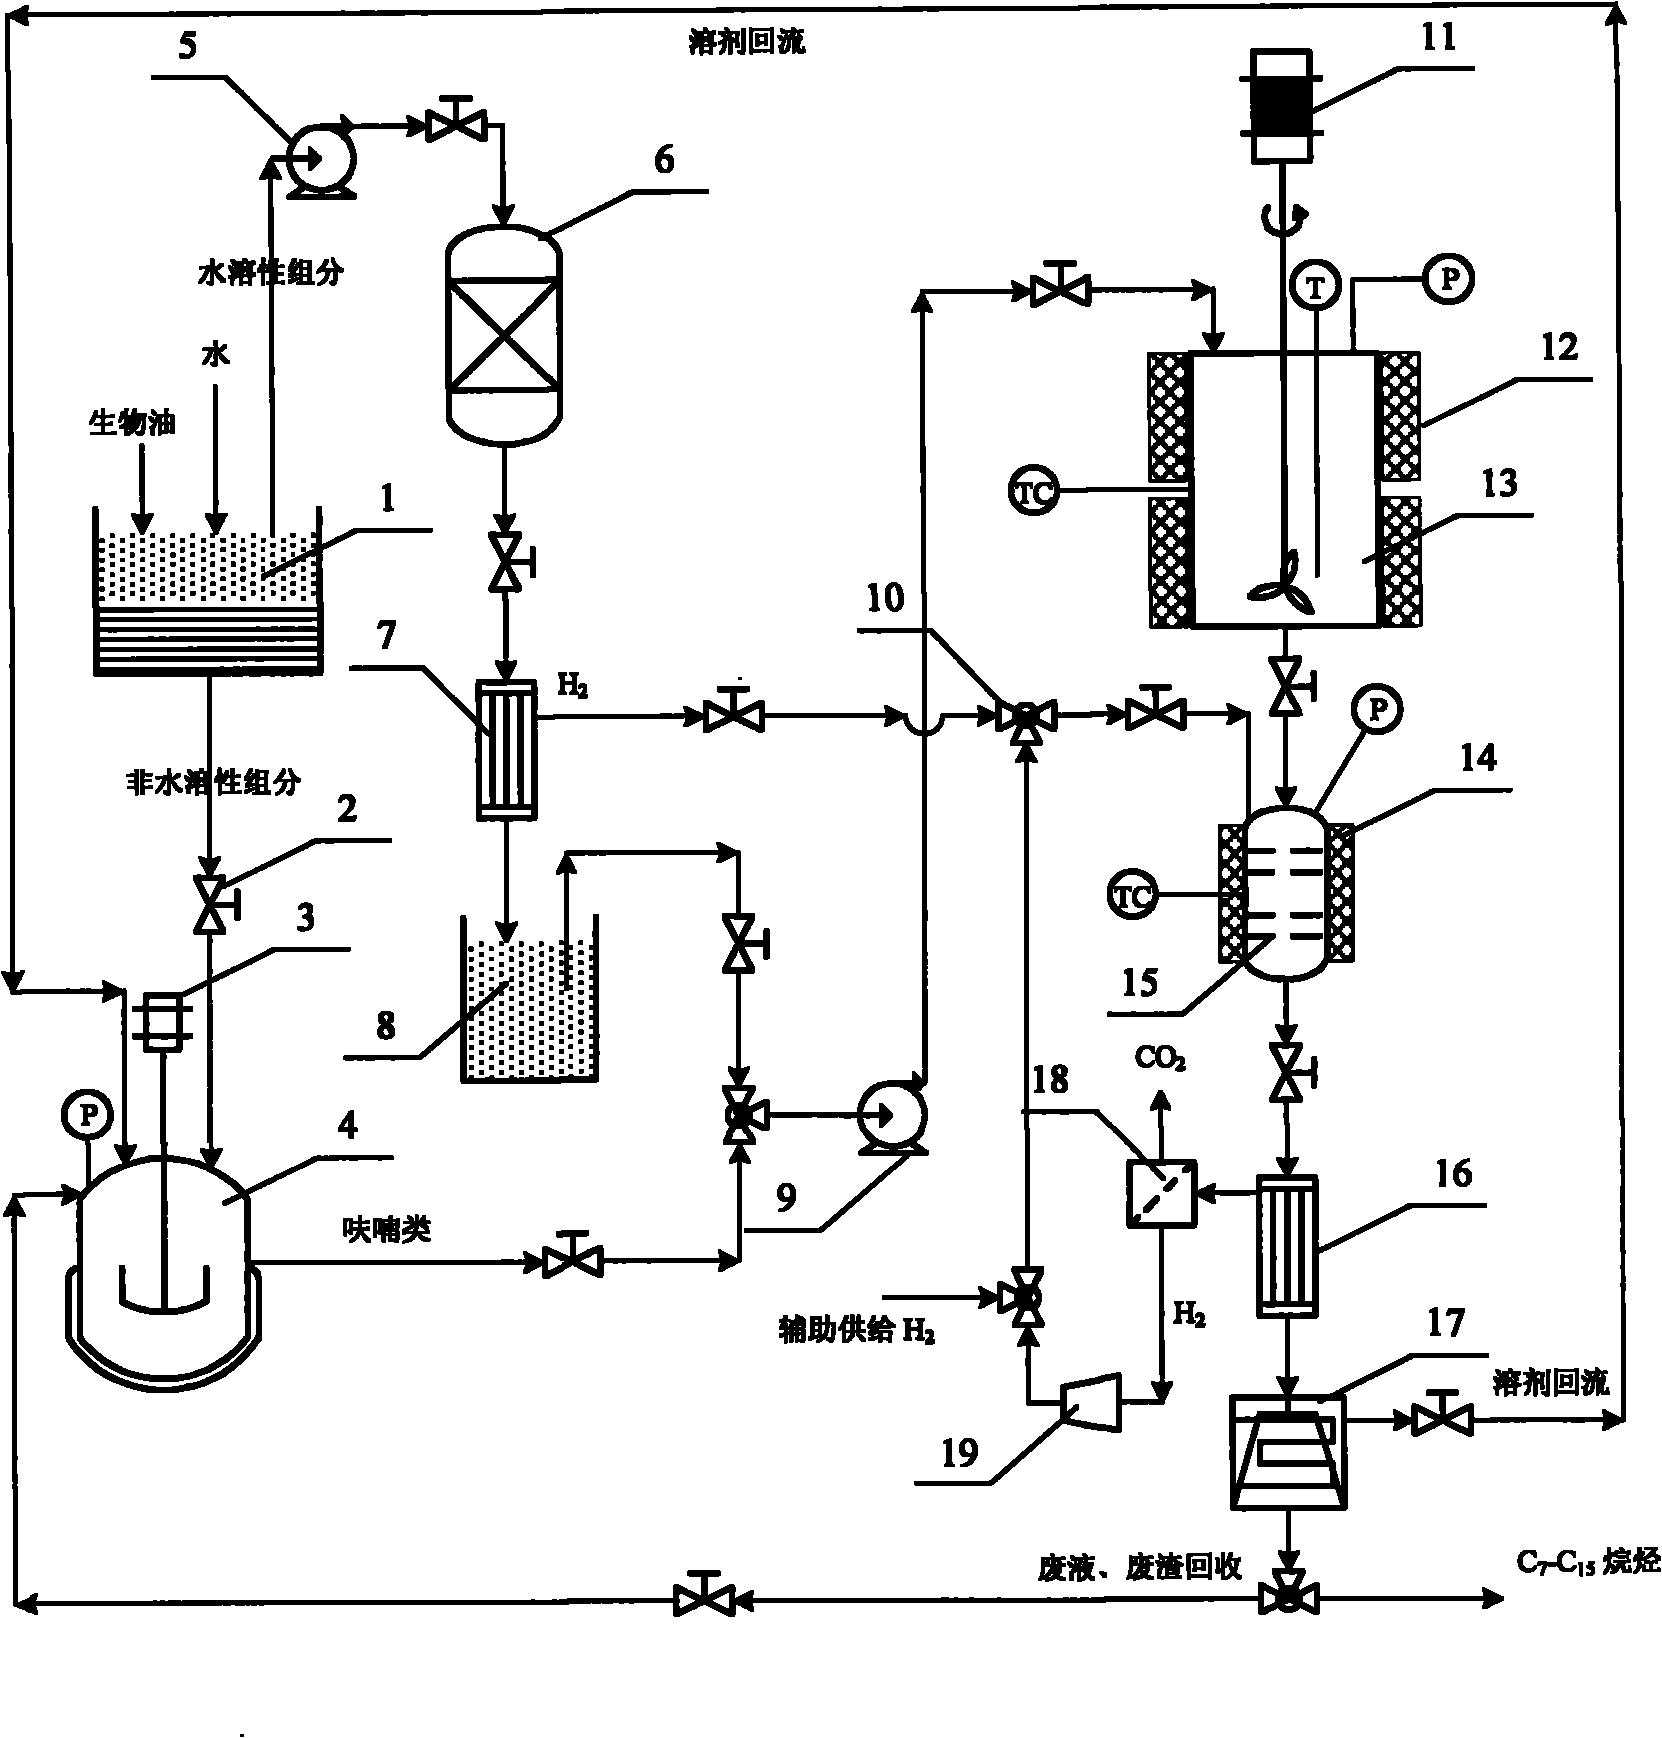 Method for preparing liquid alkane fuel by upgrading bio-oil in aqueous phase catalytic mode